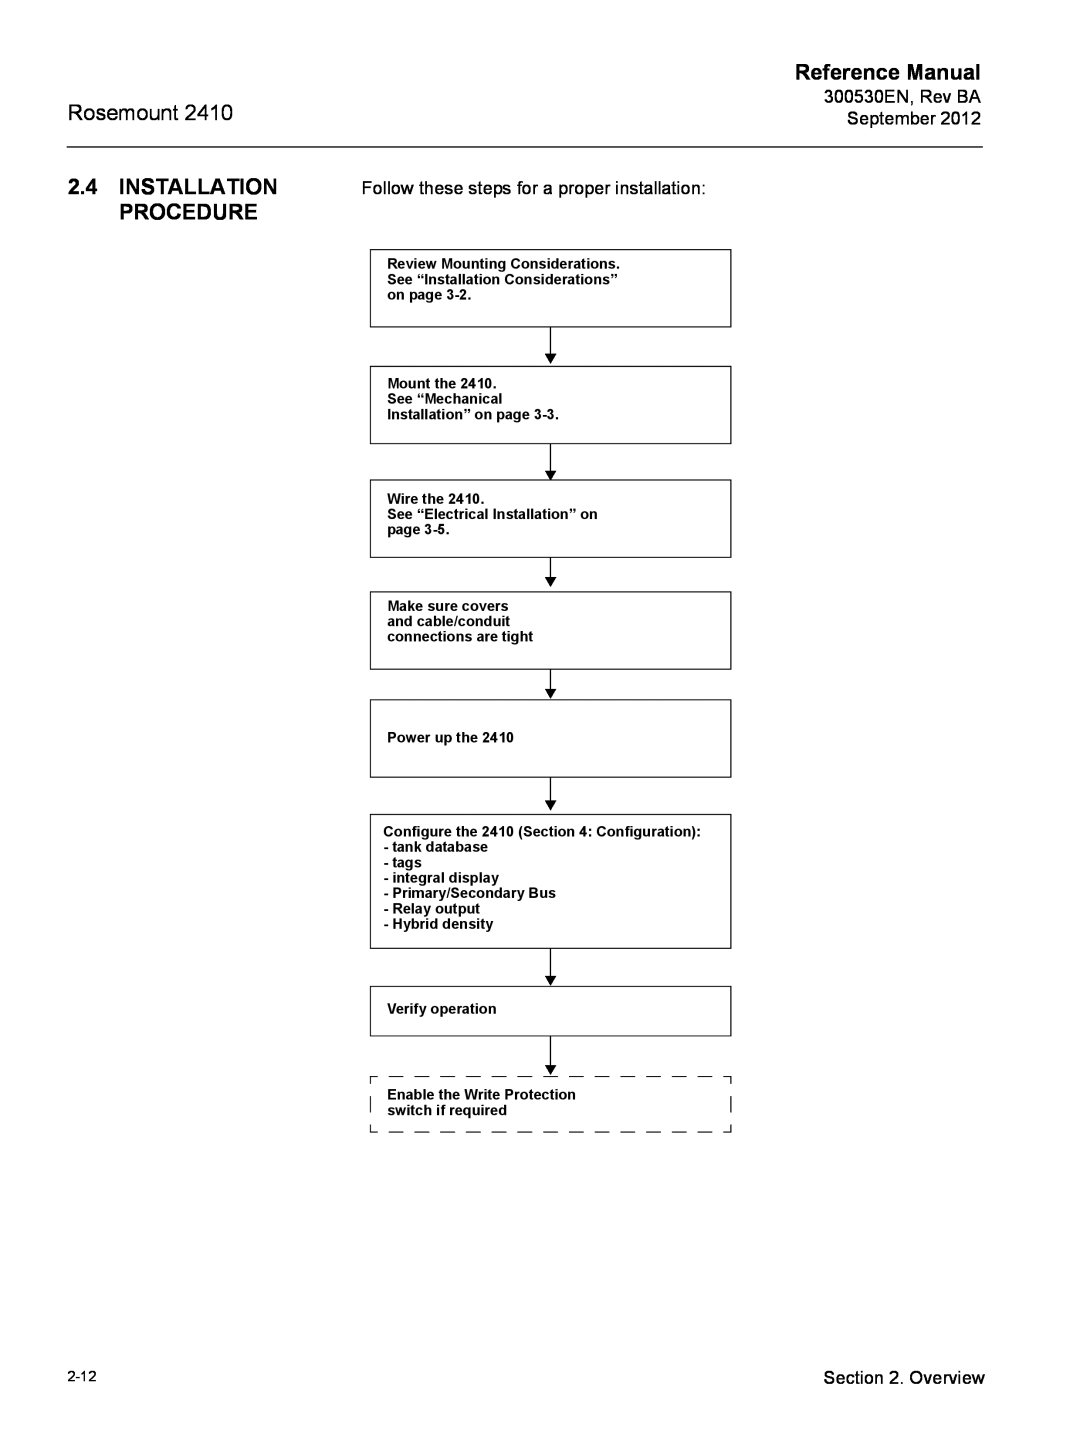 Emerson Process Management Rosemount 2410 manual Installation Procedure, Reference Manual 